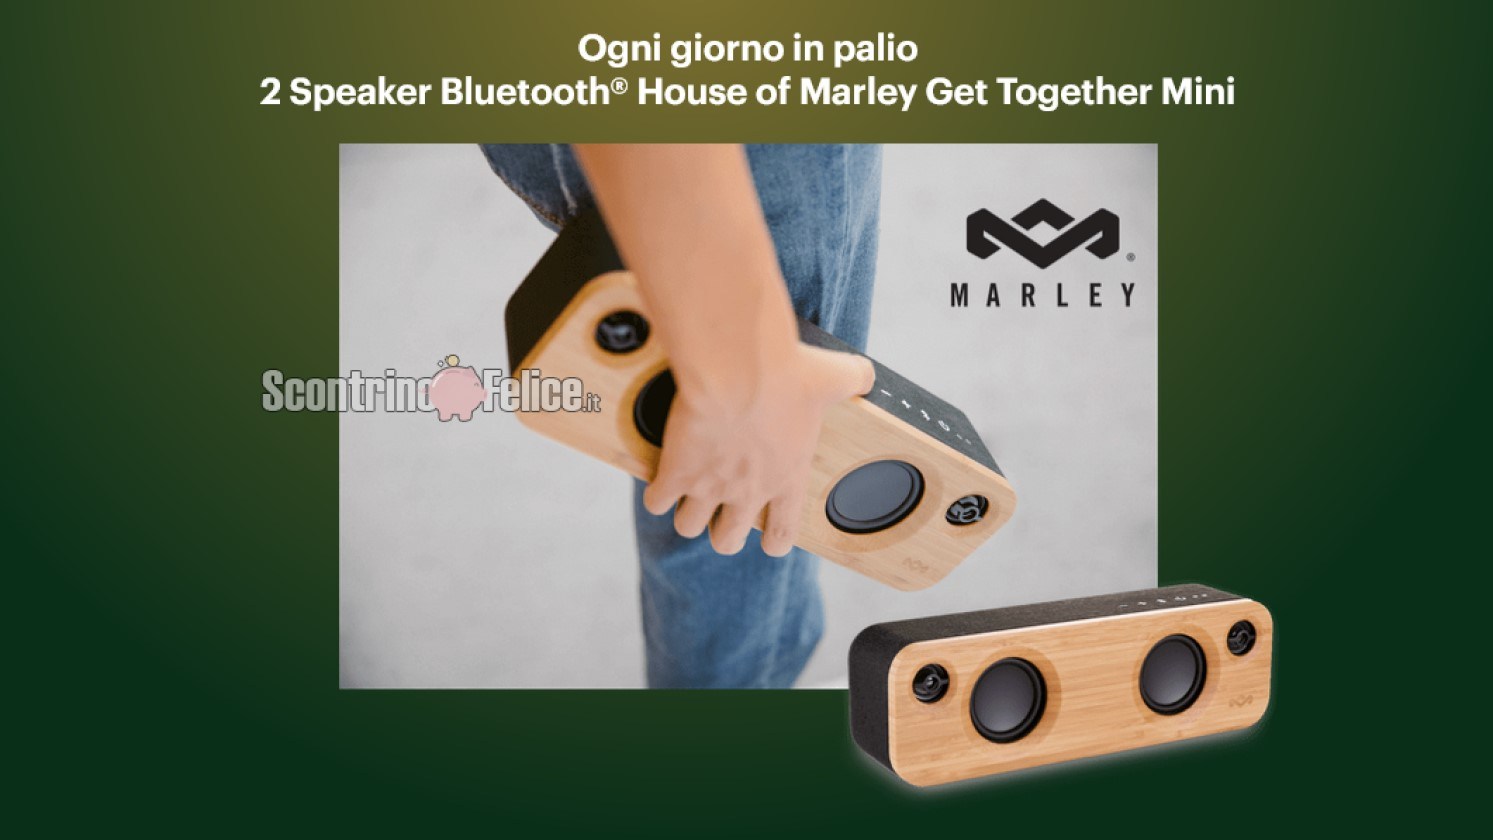 Vinci gratis uno Speaker Bluetooth House of Marley Get Together Mini con Lavazza